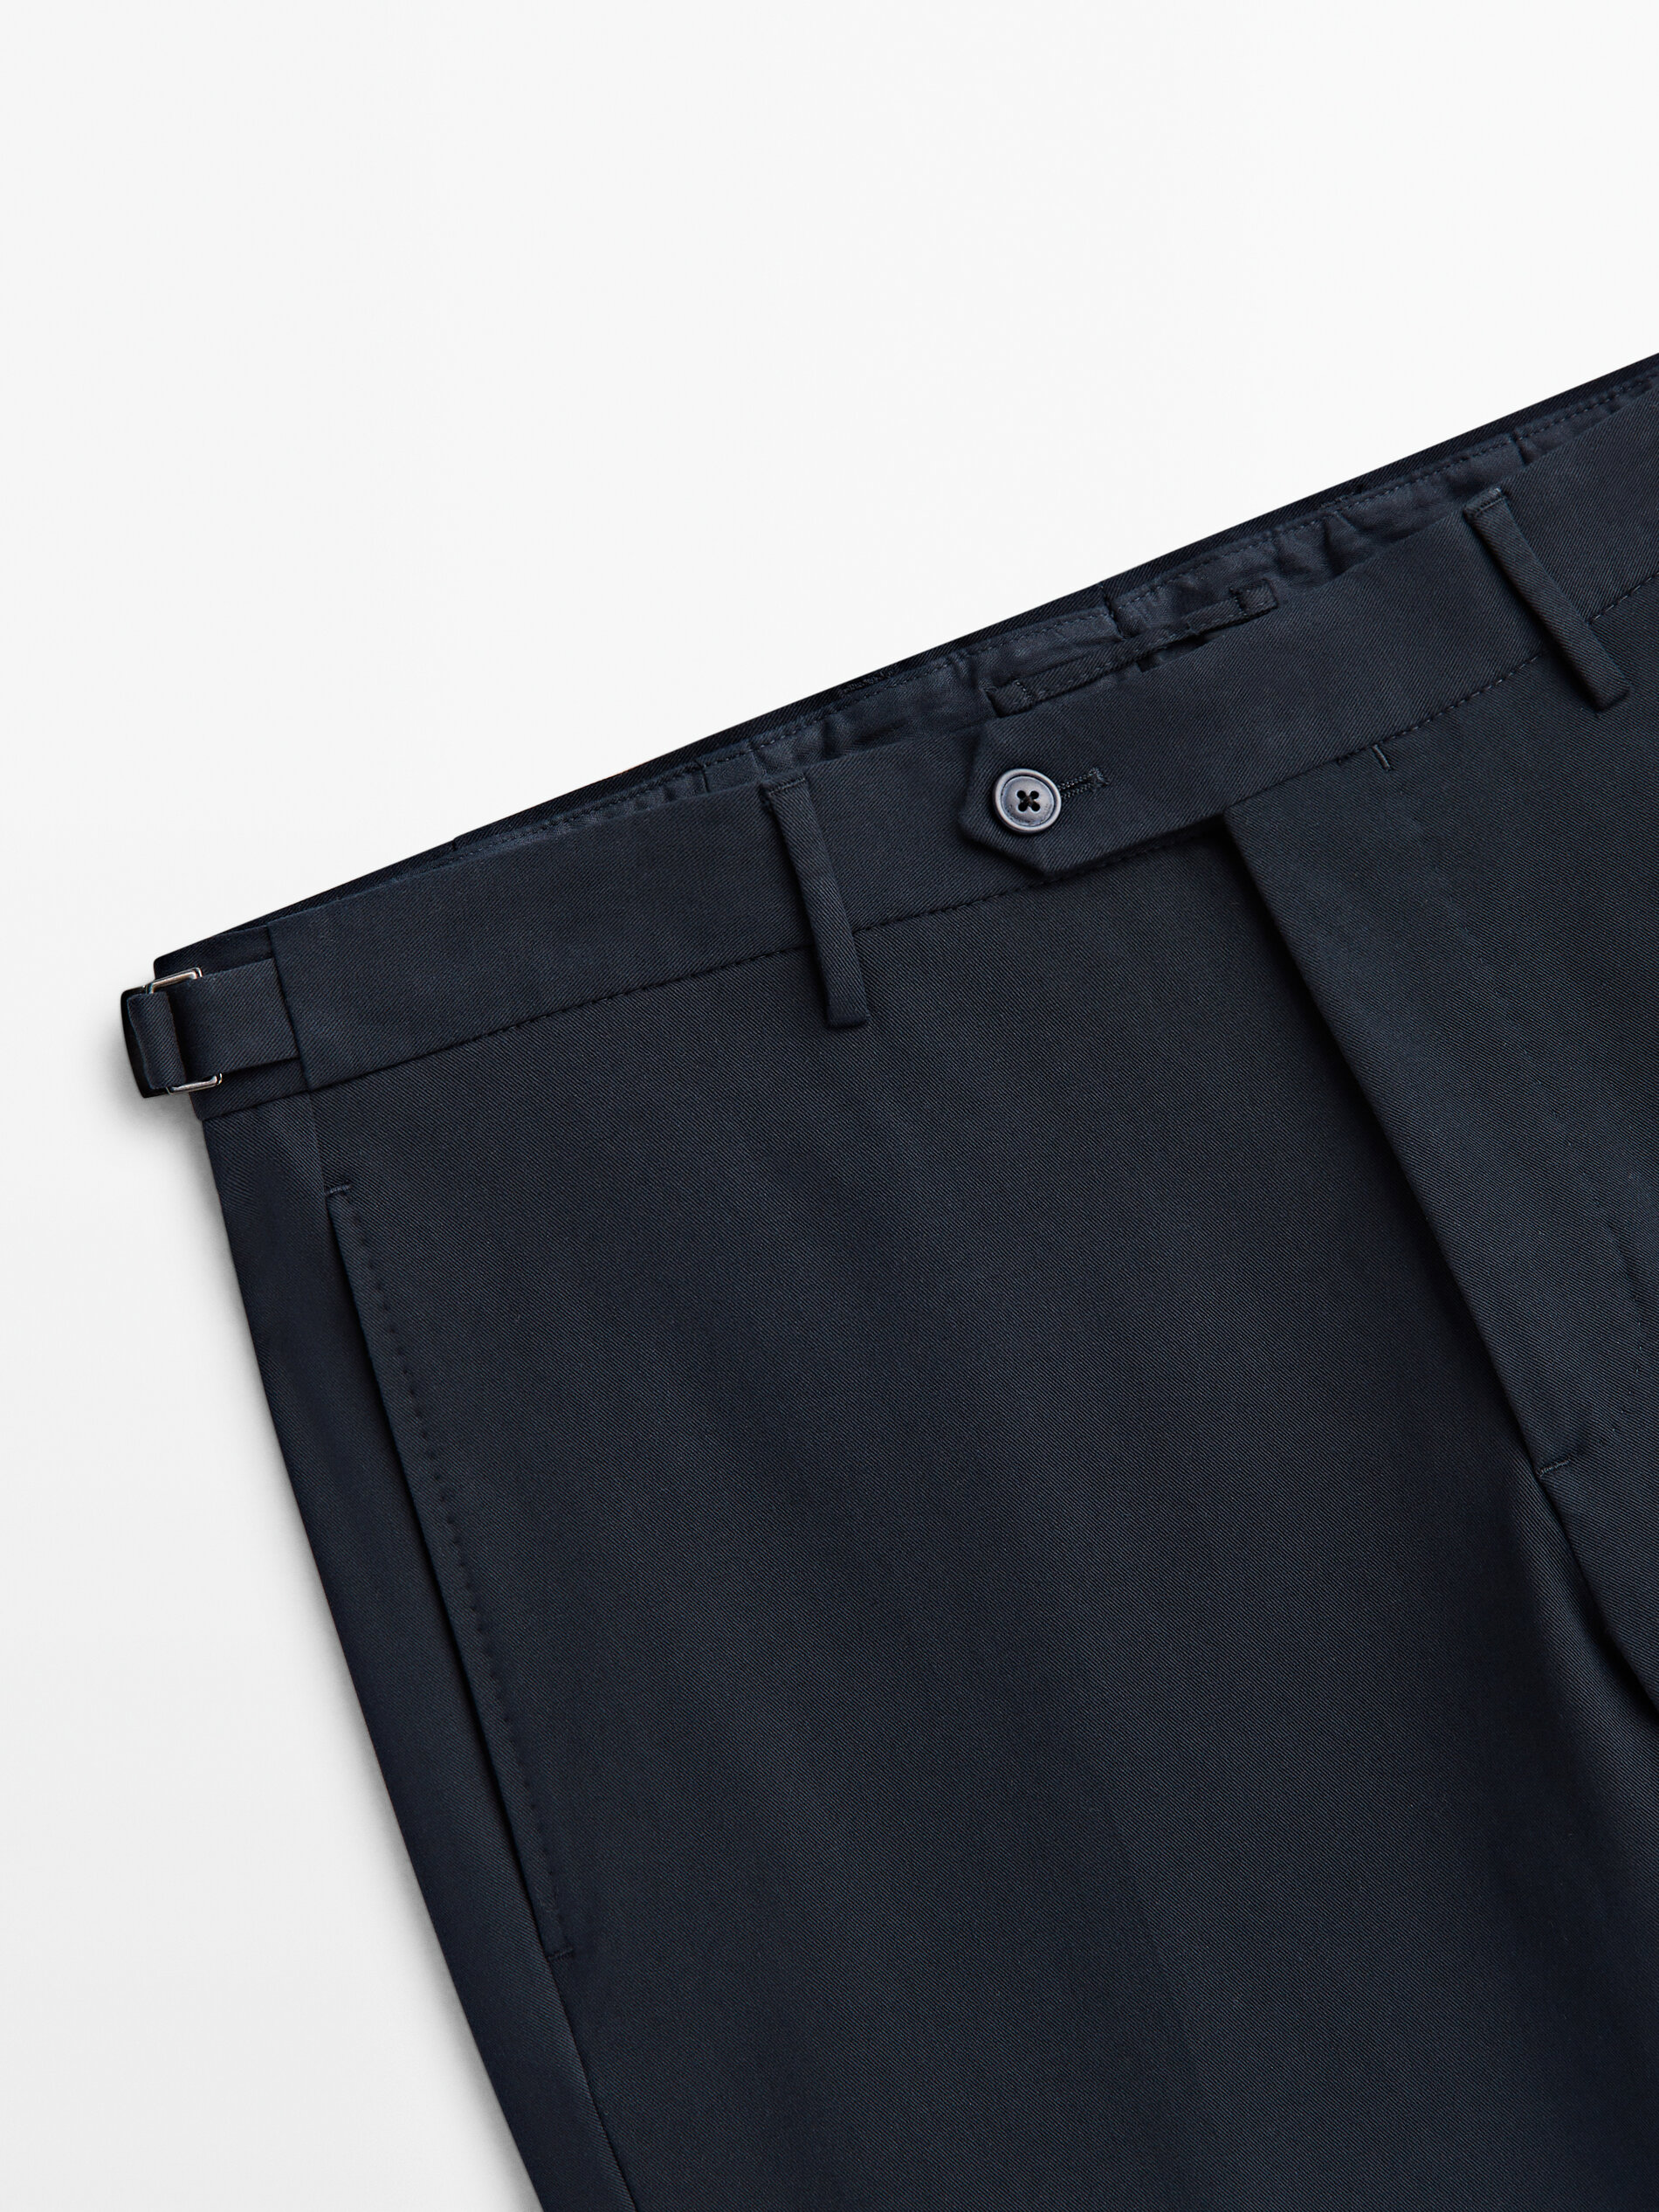 Buy Men Blue Slim Fit Textured Casual Trousers Online  755826  Allen Solly